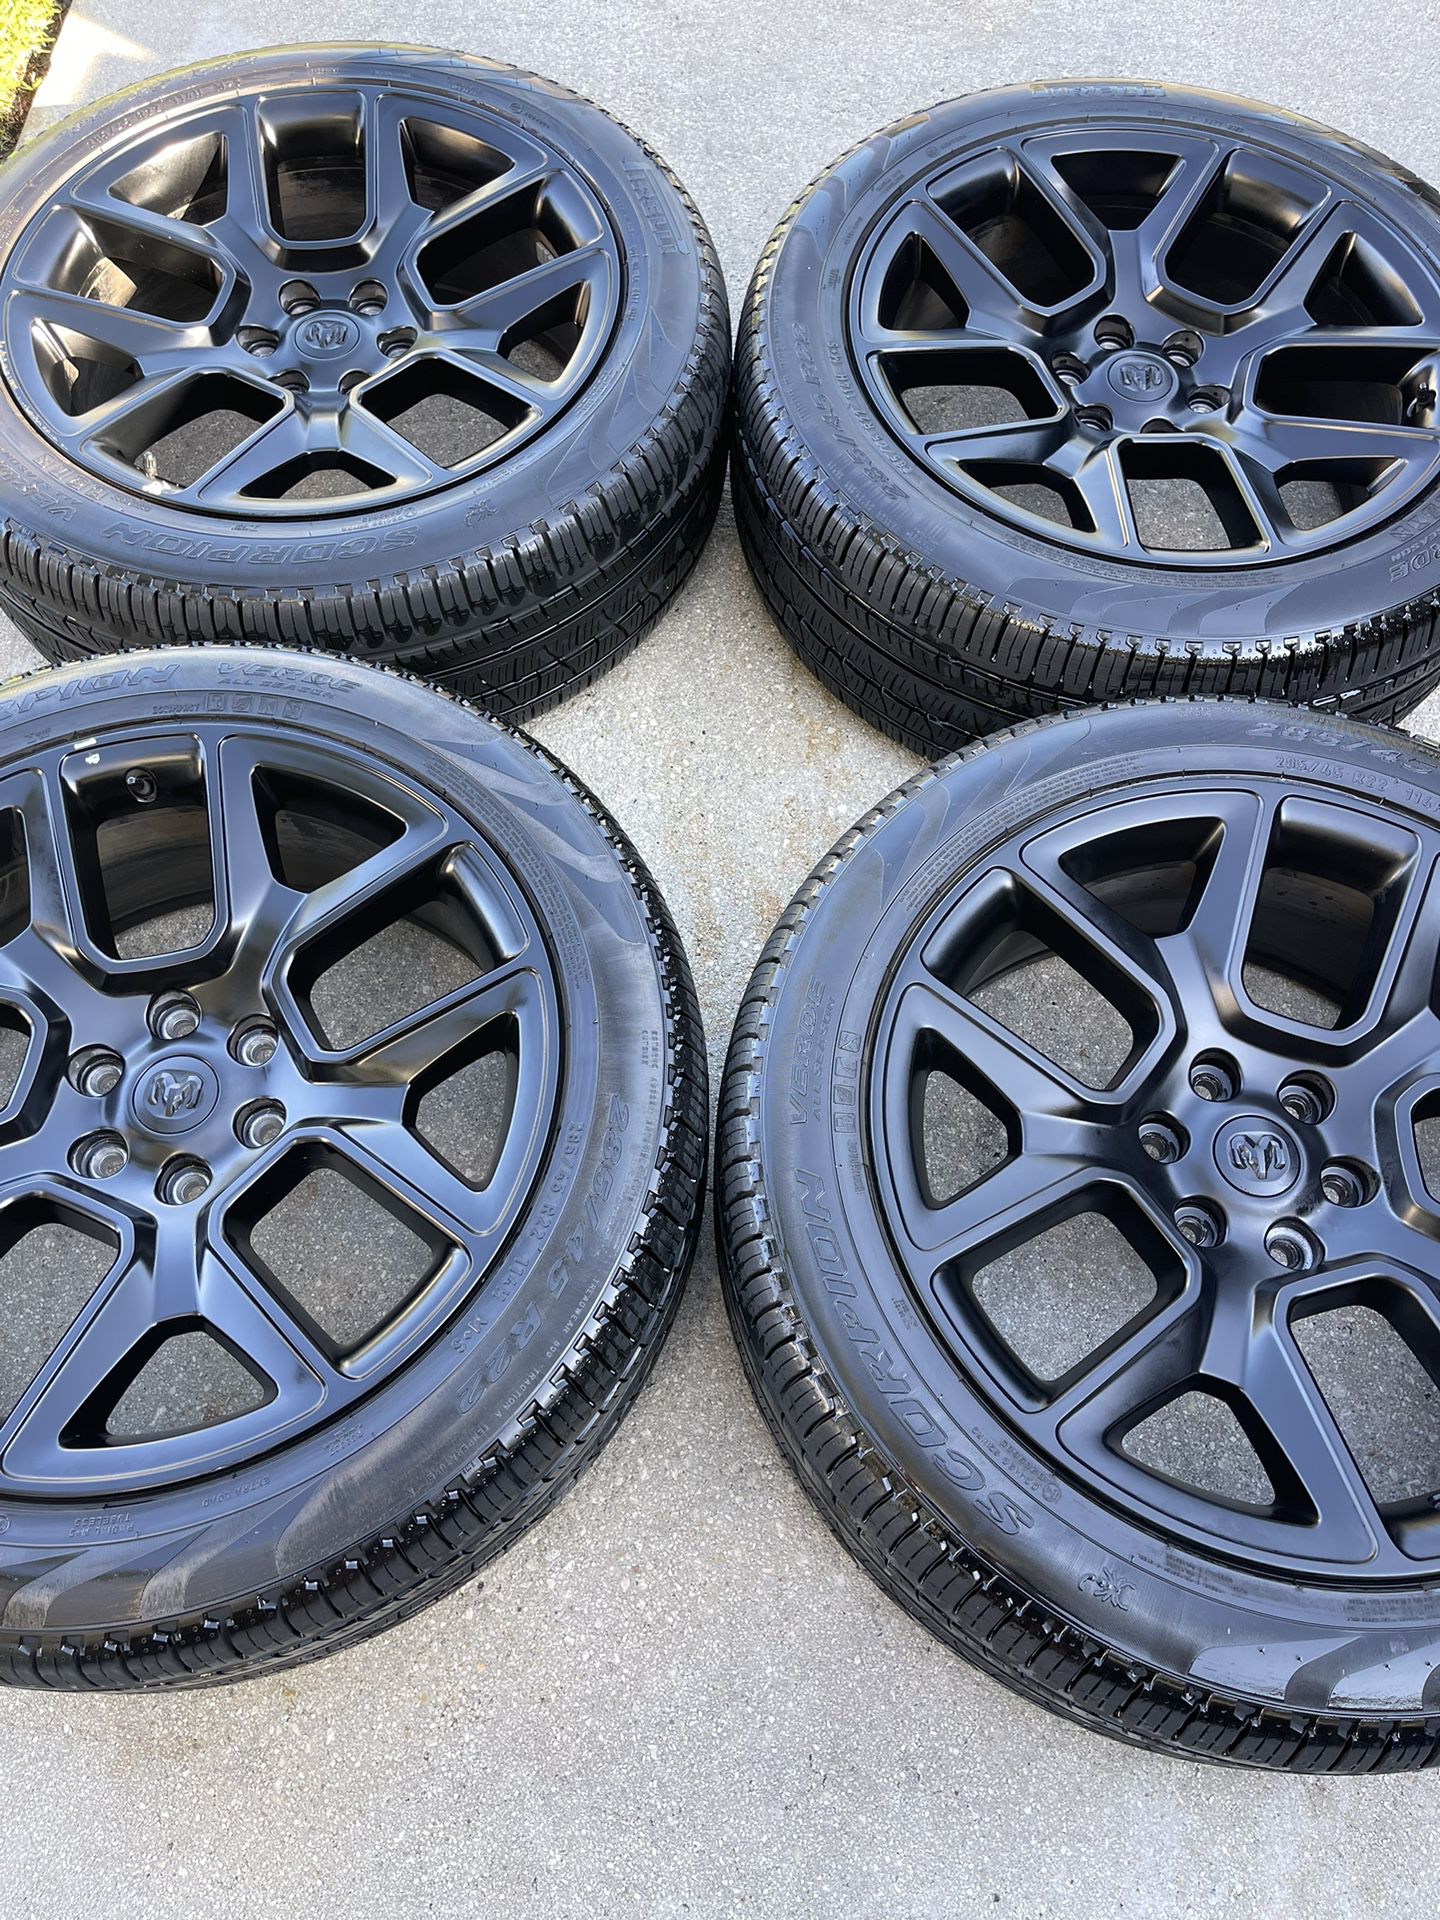 22” Dodge Ram OEM Rims Wheels Tires!